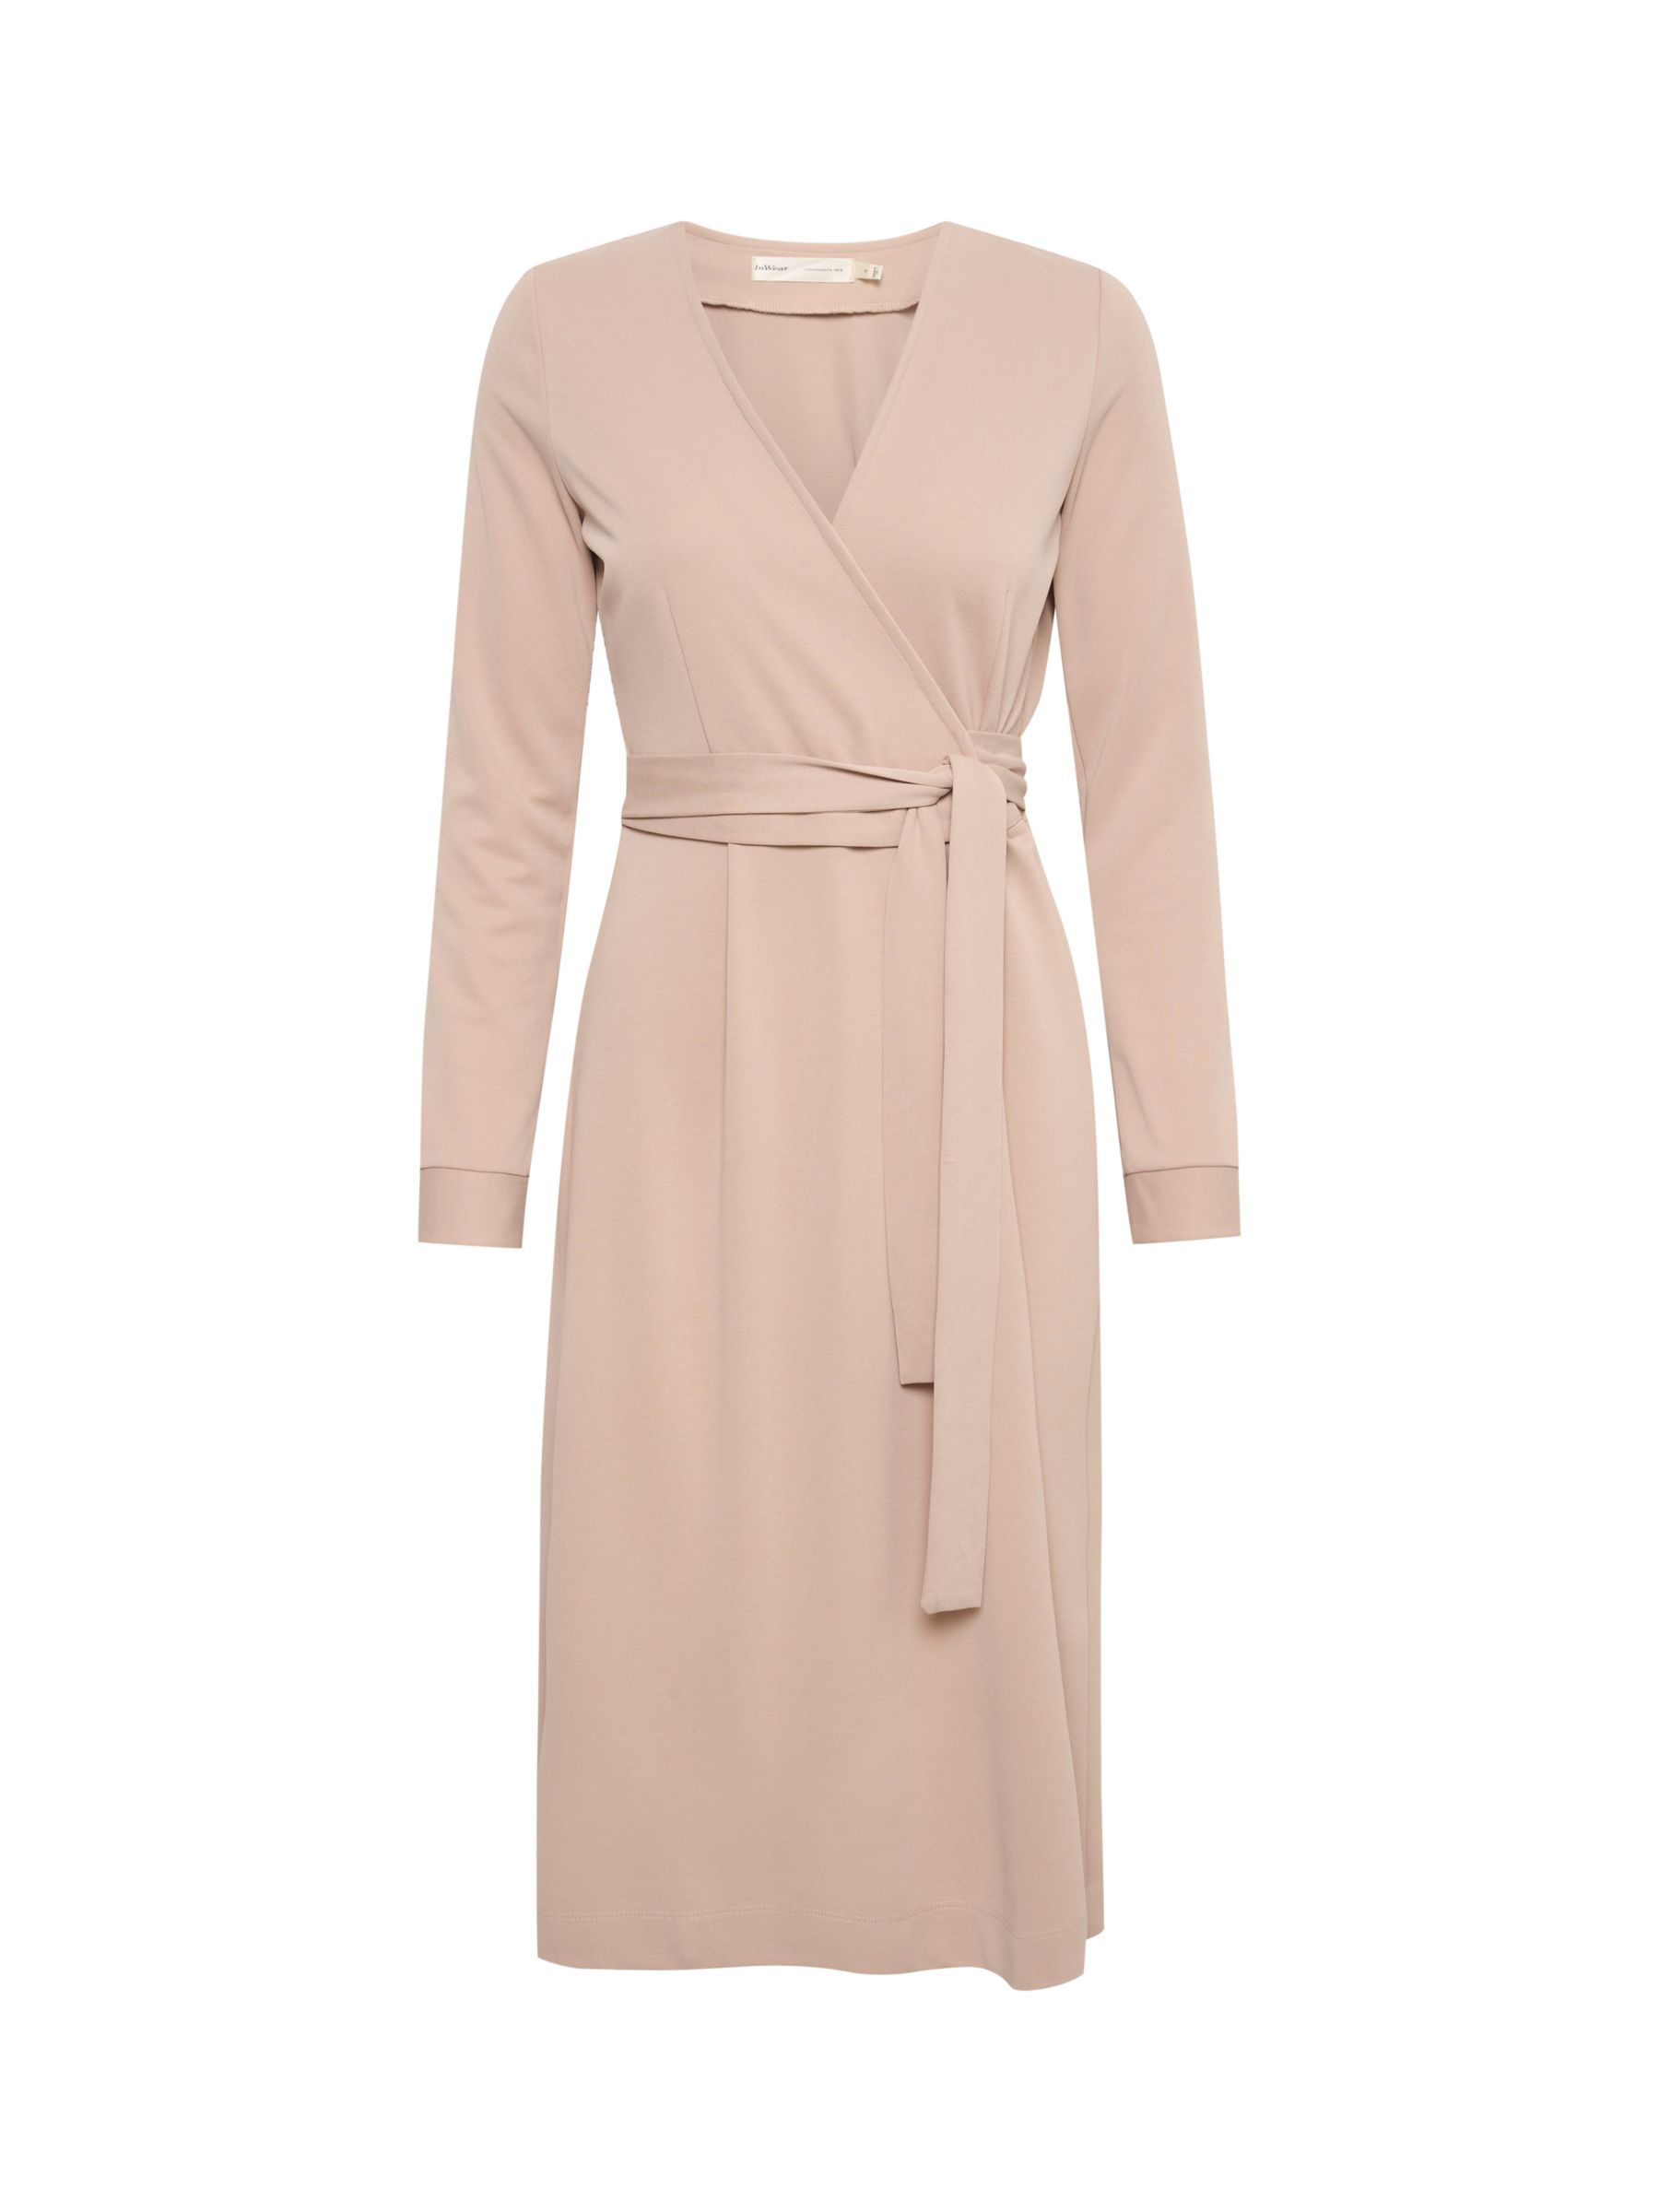 InWear Alano Long Sleeve Dress, Sandstone at John Lewis & Partners